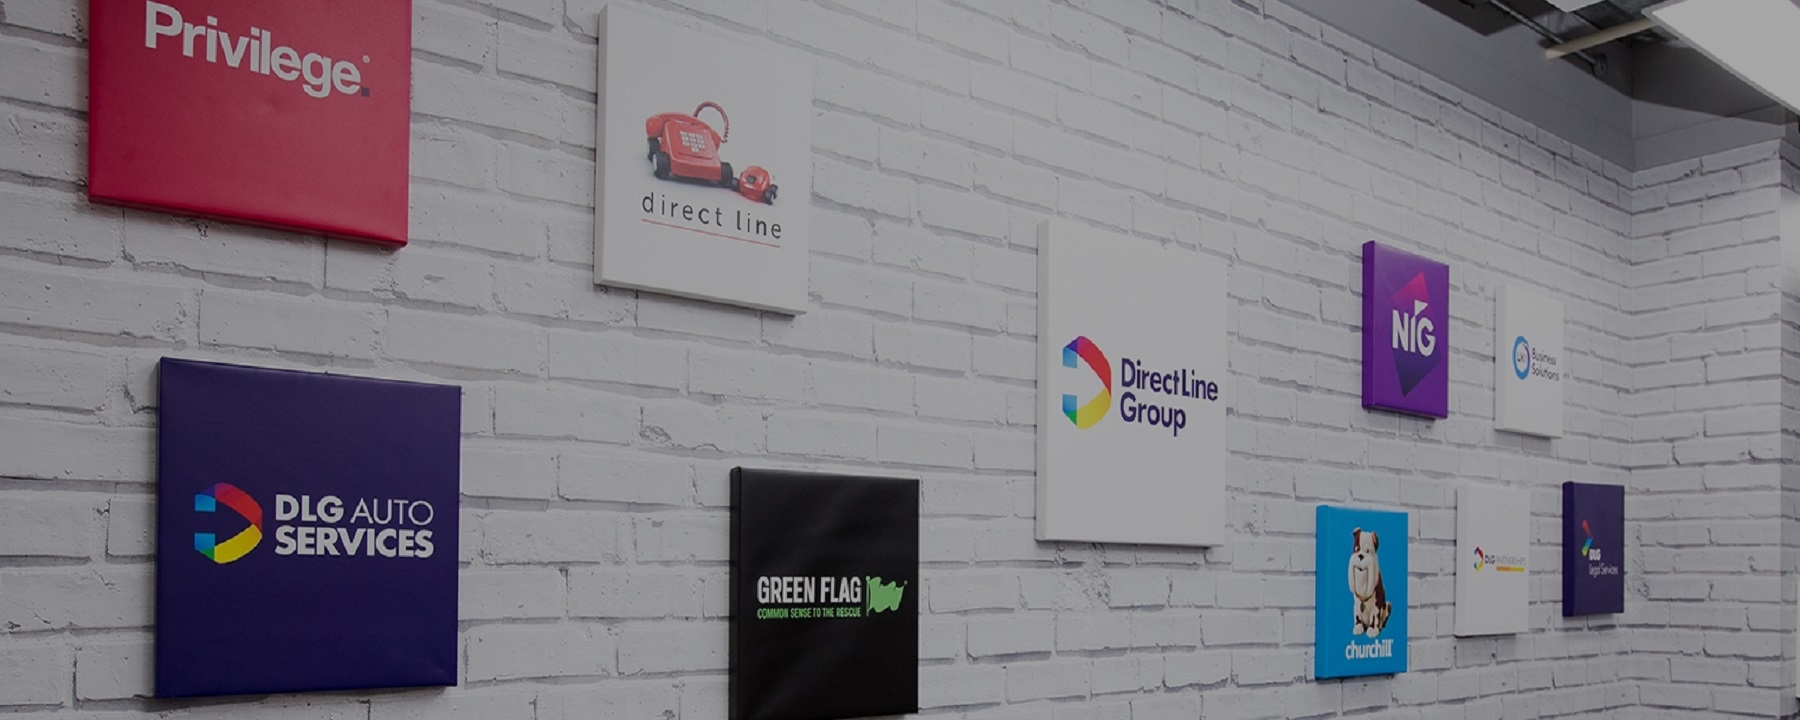 Direct Line Group logos